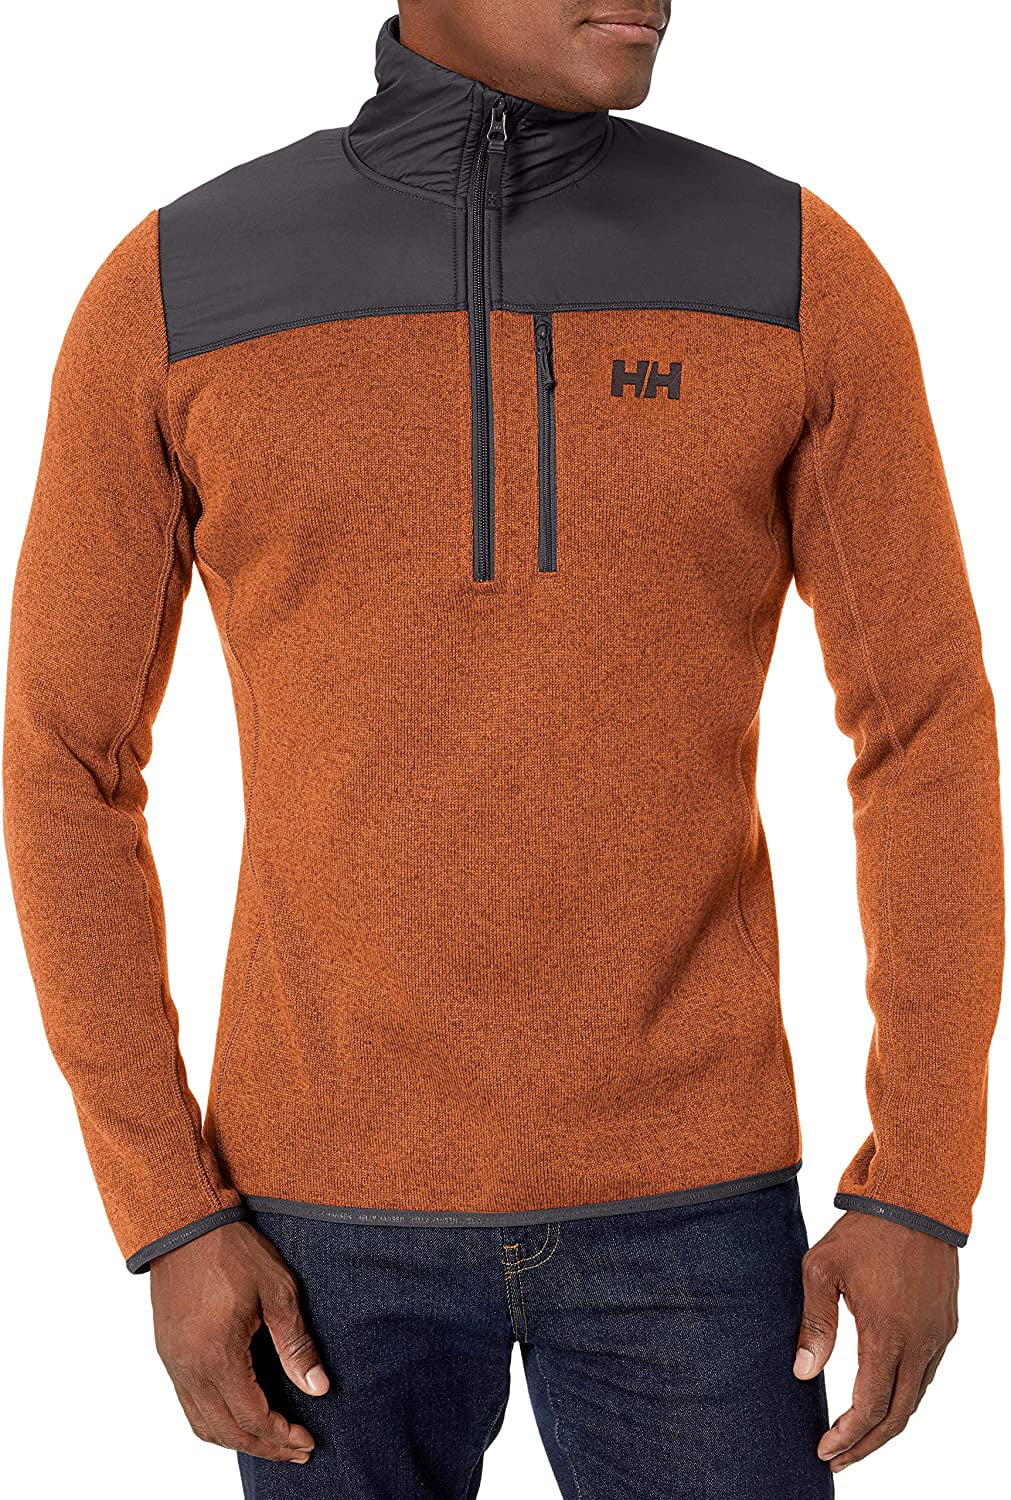 Helly-Hansen Men's Varde Knitted Fleece Jacket